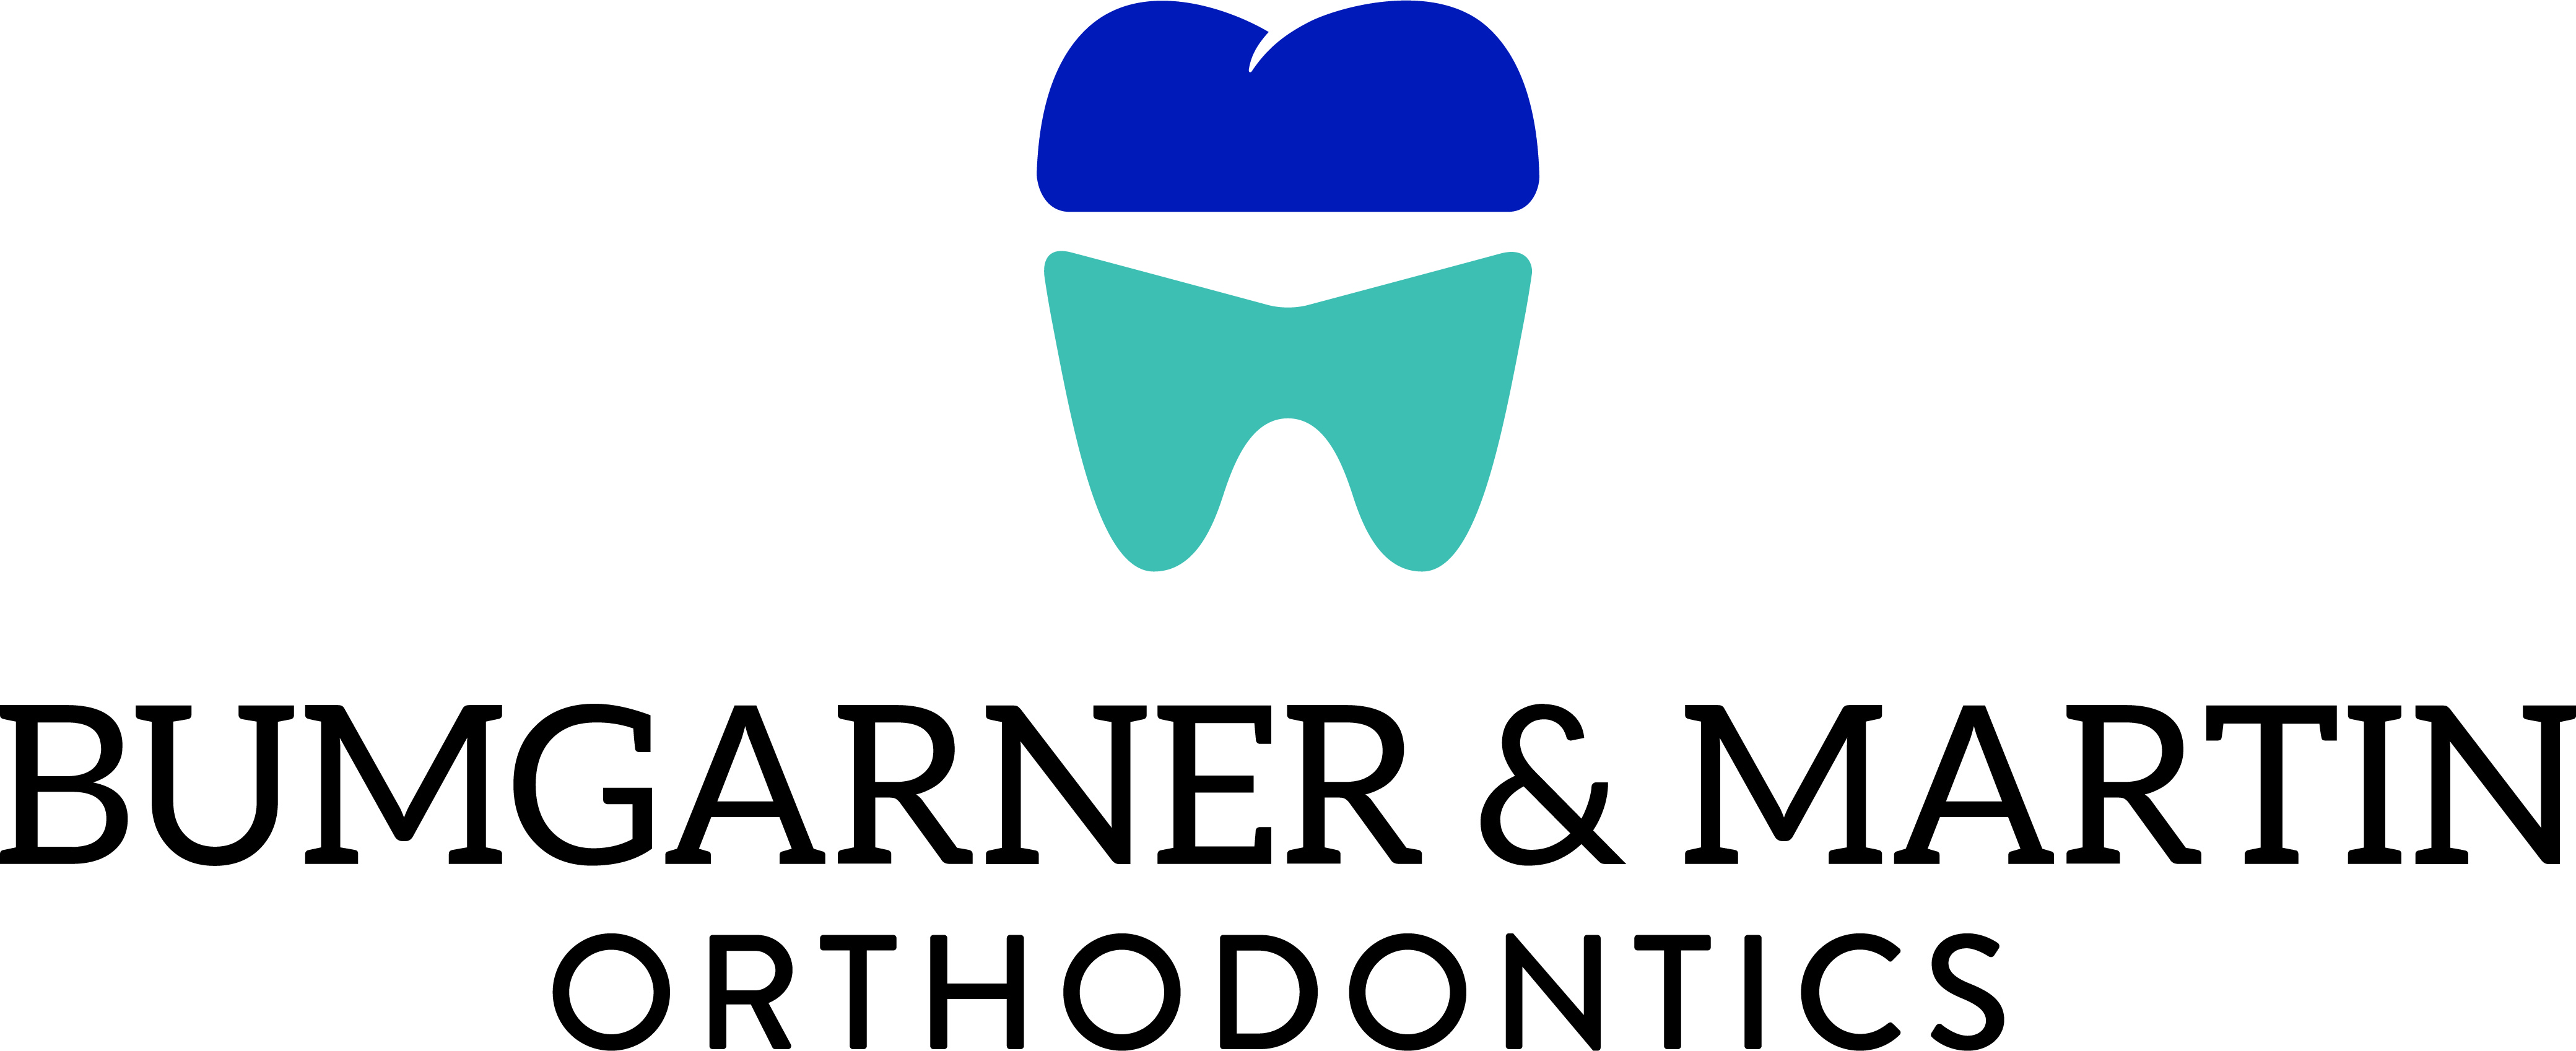 Sponsor Bumgarner & Martini Orthodontics